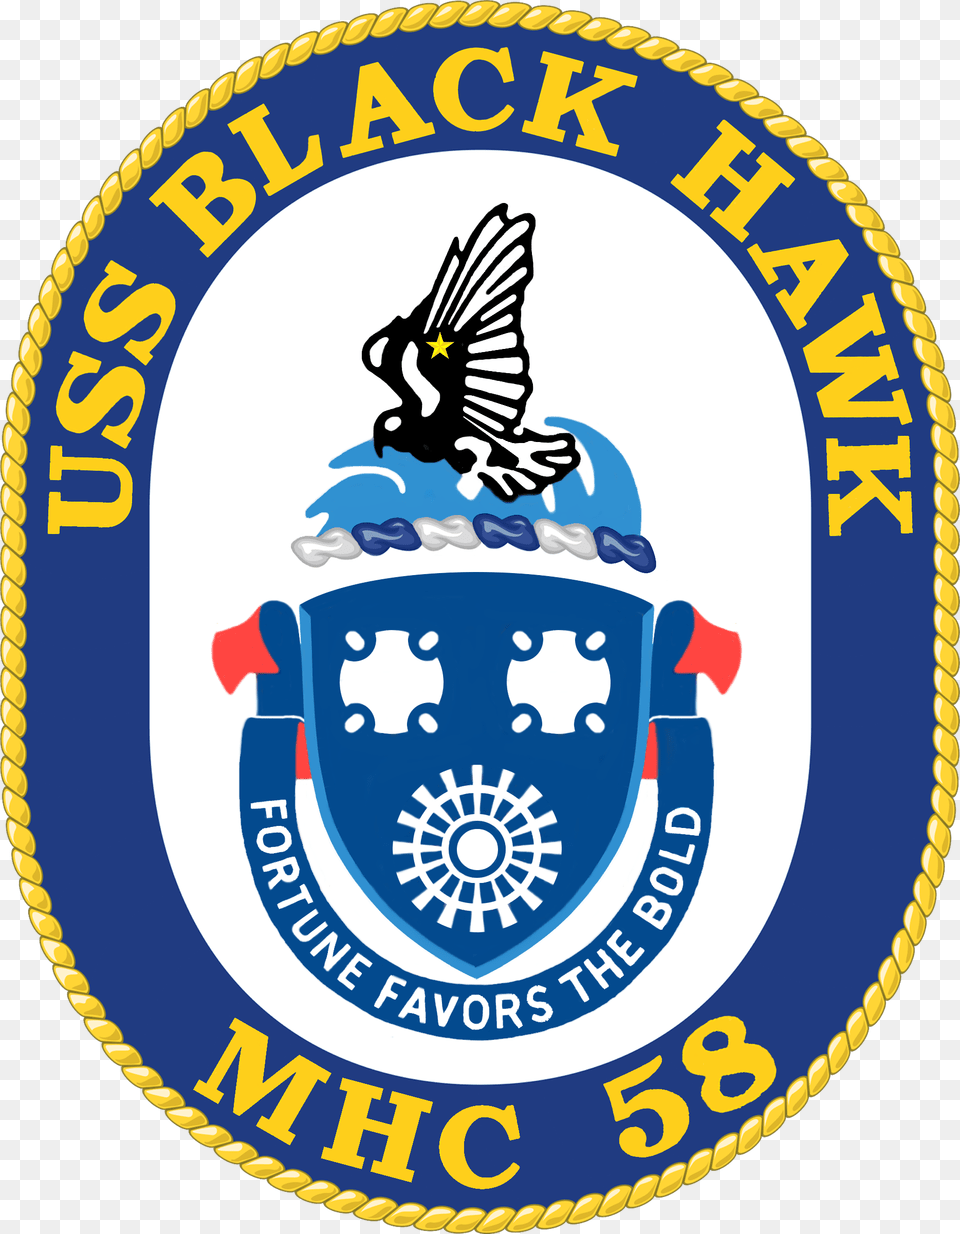 Uss Black Hawk Mhc 58 Crest Uss Black Hawk Mhc, Badge, Logo, Symbol, Emblem Png Image